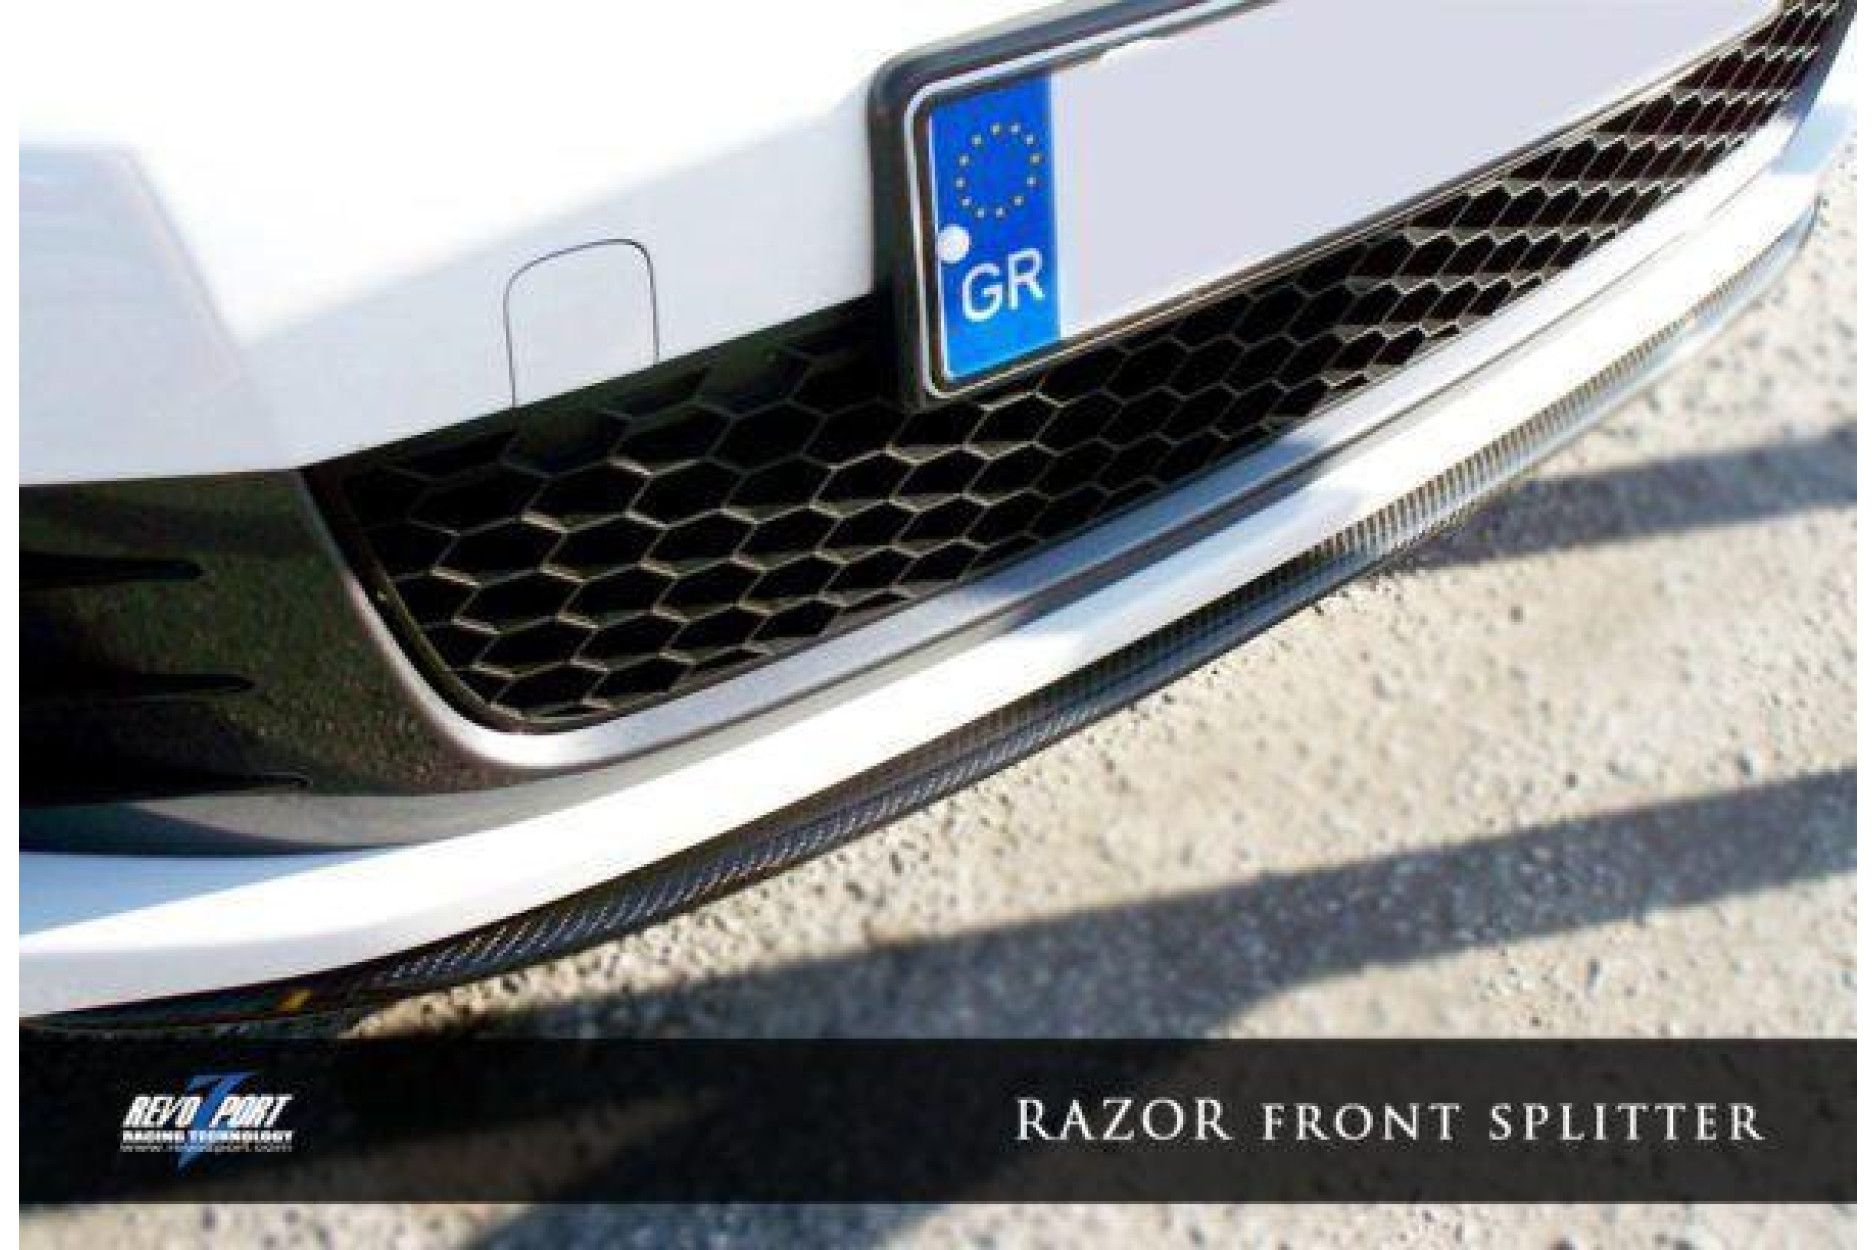 RevoZport Frontsplitter for Volkswagen Golf MK6|Golf 6 GTI "Razor" (3) 